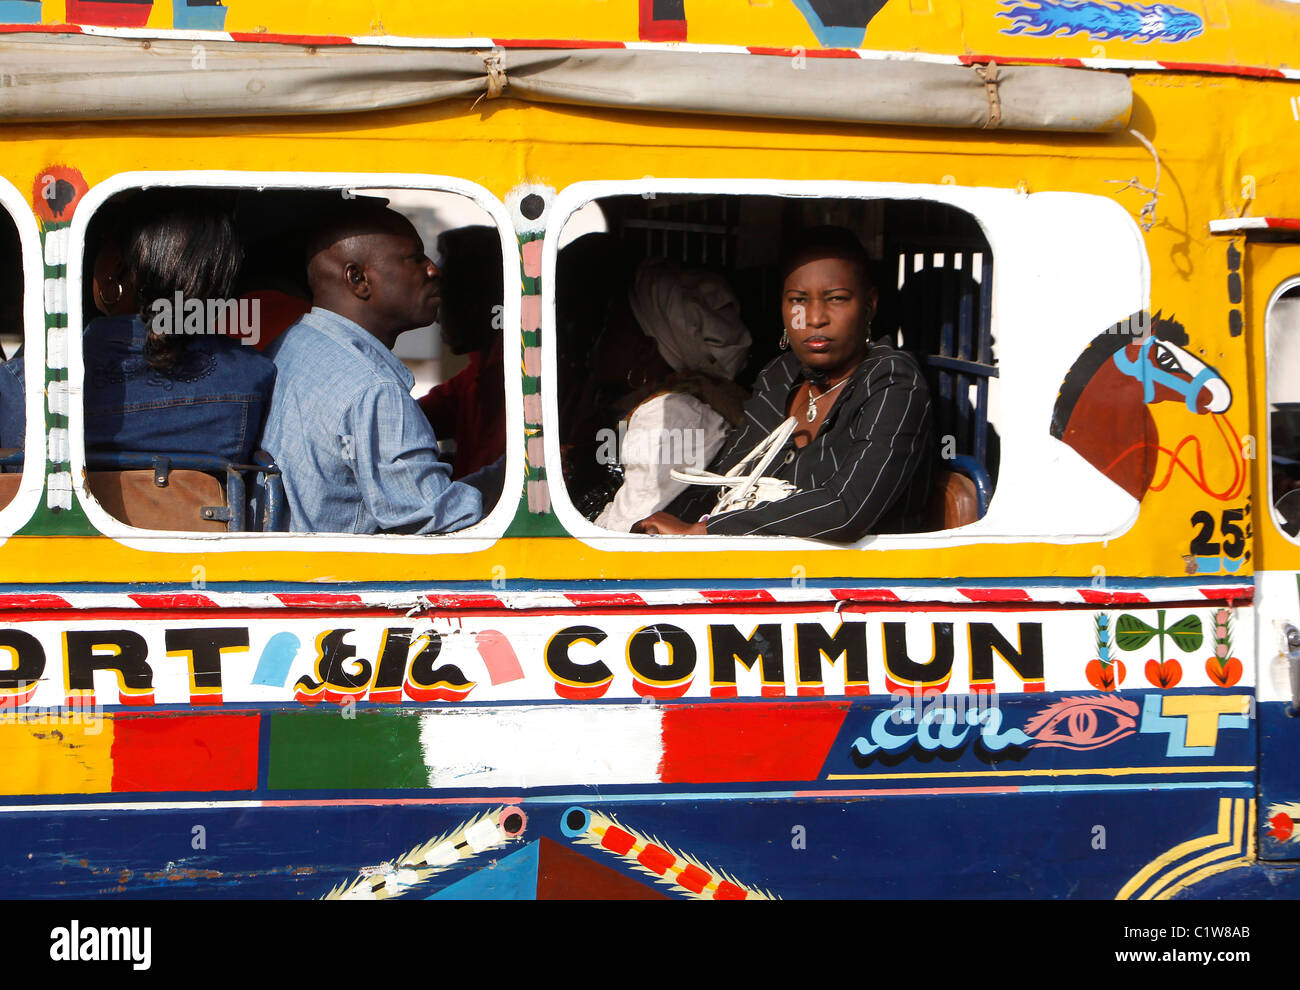 Senegal, Dakar: traditional public transport bus Stock Photo